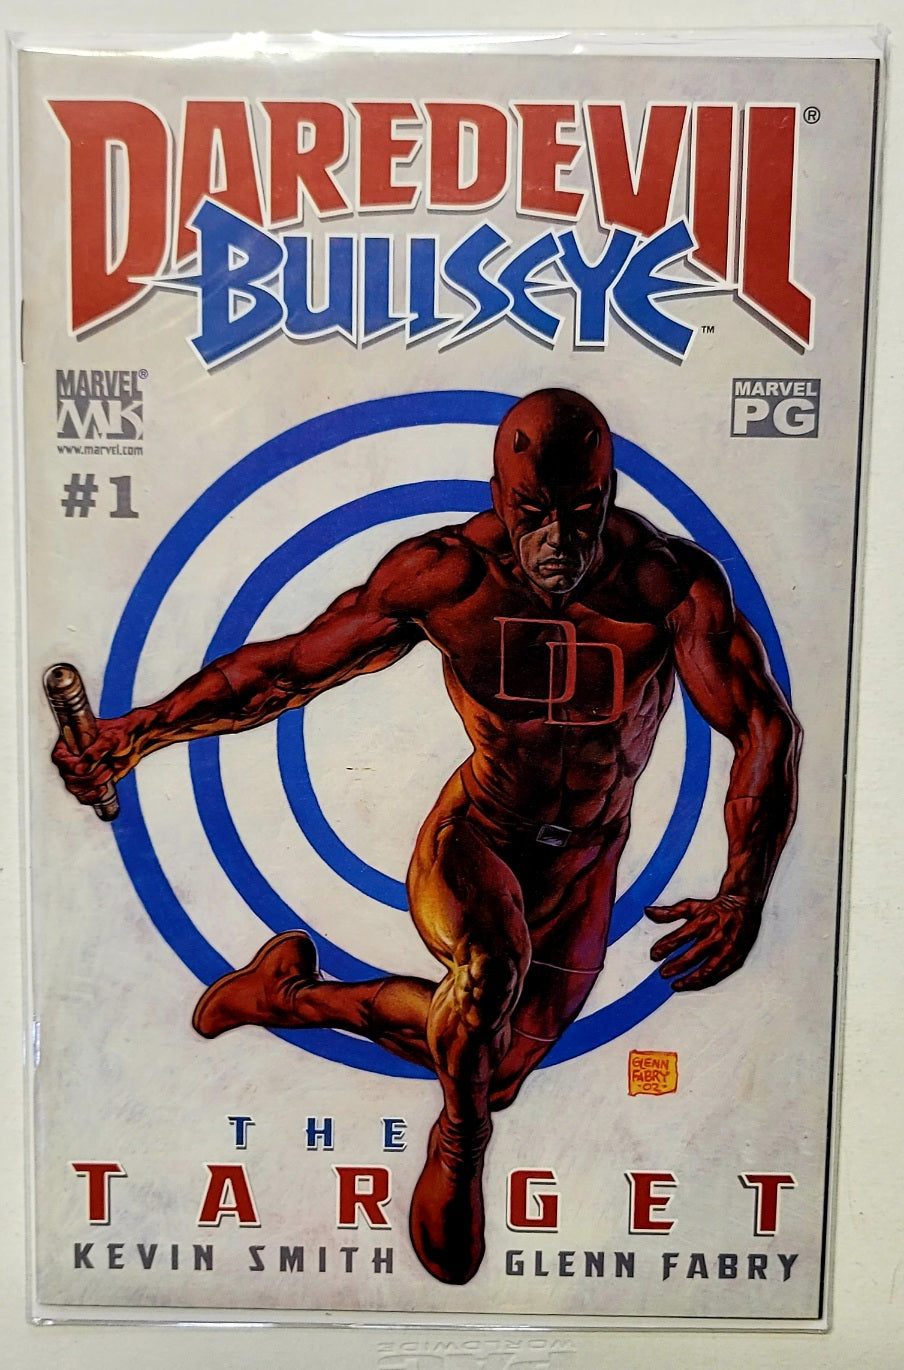 Daredevil the Bullseye - #1 Marvel Comics + Digital Edition